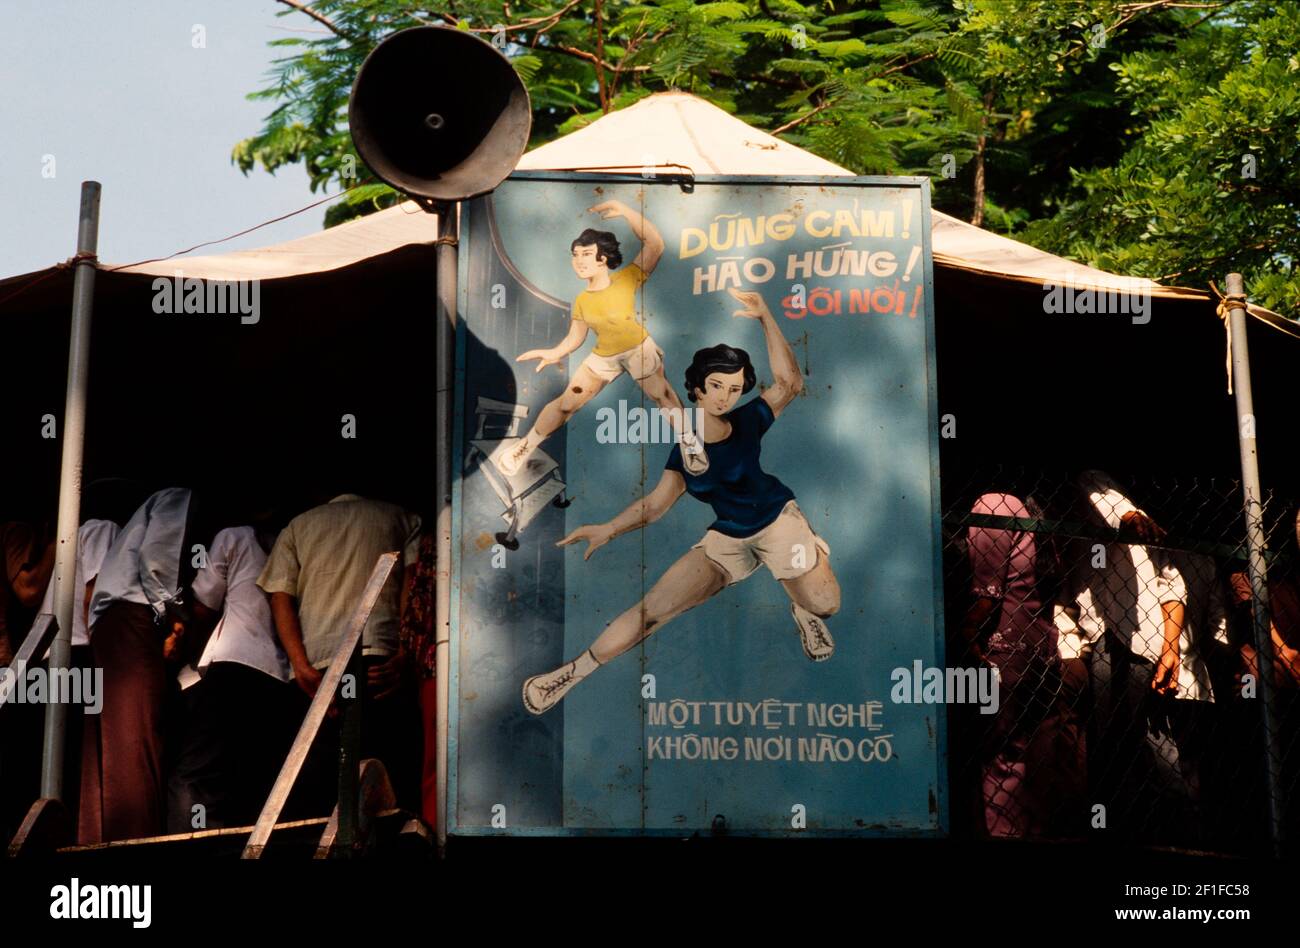 Gymnastic display, advertsing itself as 'exiting', and 'do not hesitate' Hanoi, North Vietnam, June 1980 Stock Photo